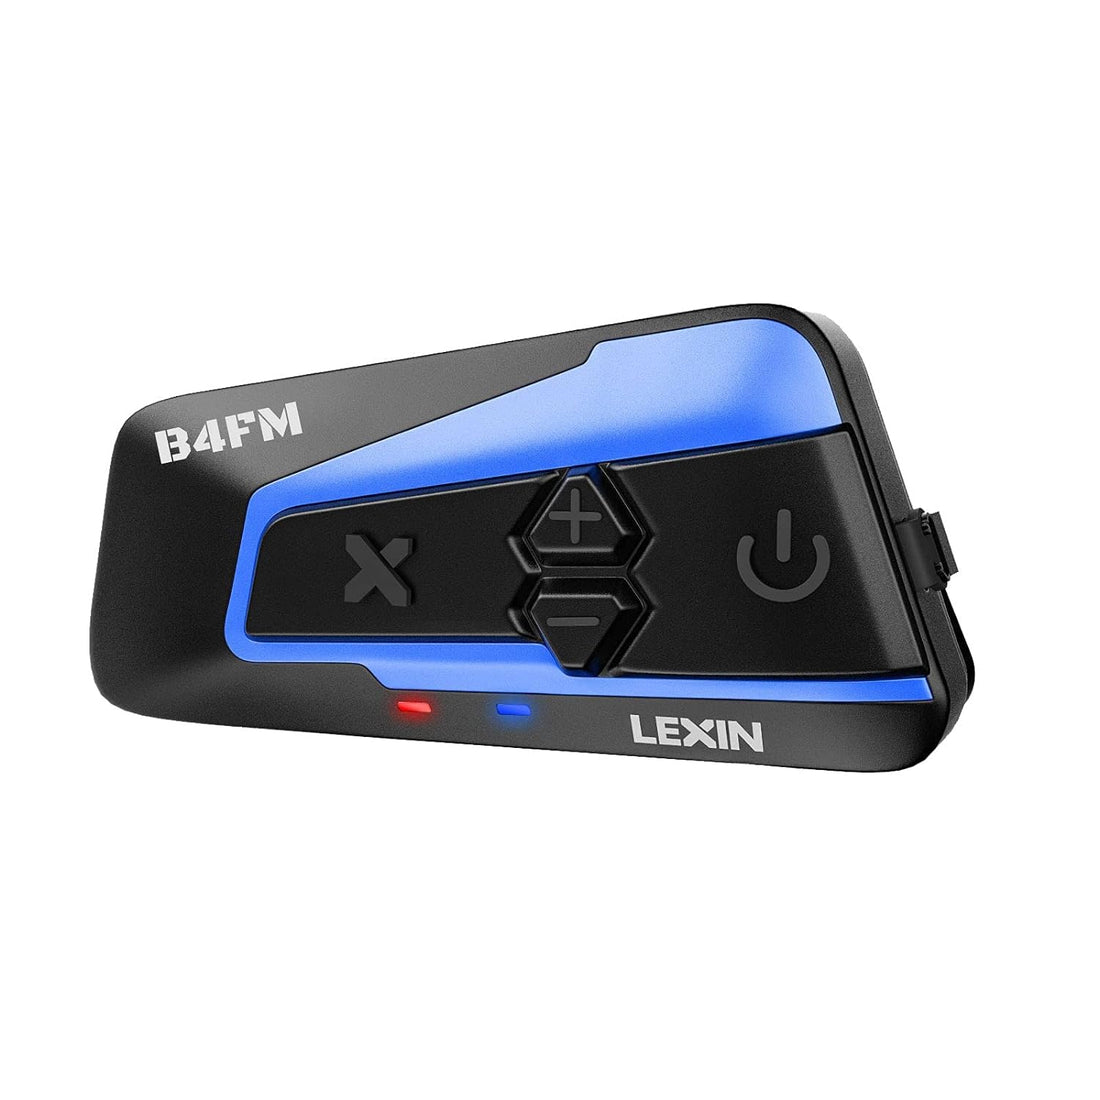 LEXIN LX-B4FM Wireless Motorcycle Intercom, Universal Helmet Communication System up to 4 Riders, Waterproof Motorcycle Bluetooth Headset with 1600m Range- Blue